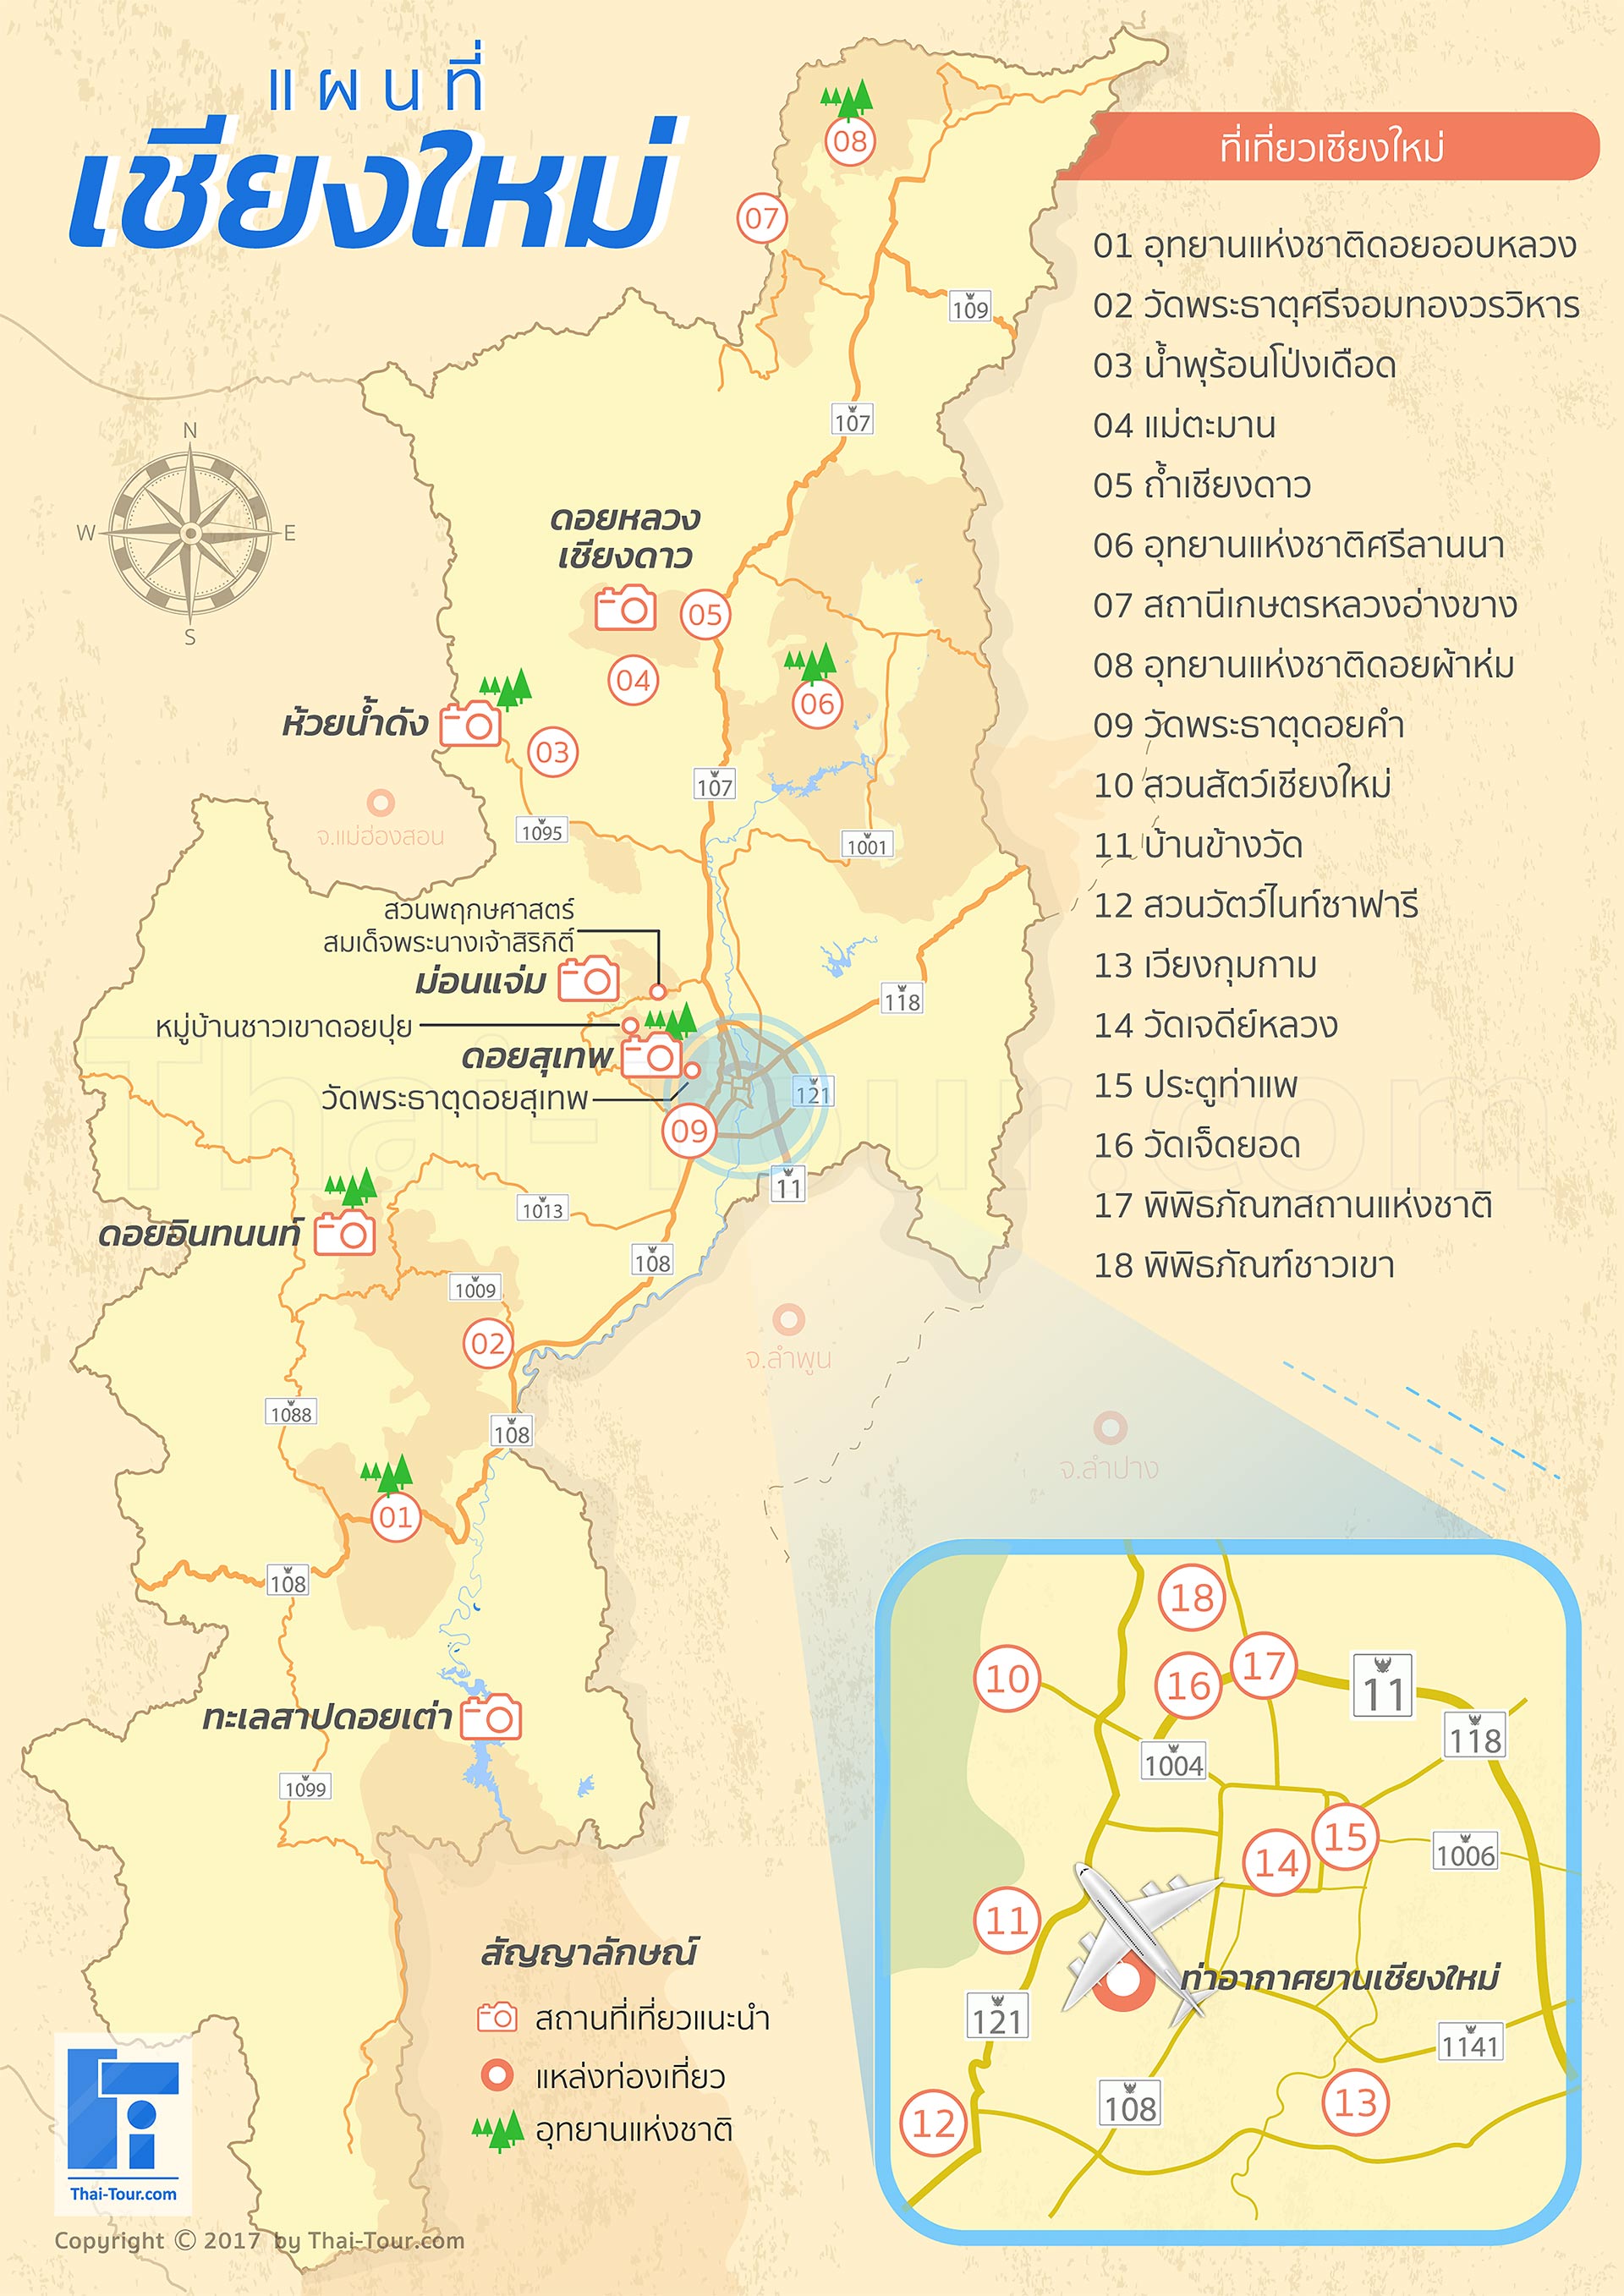 http://www.thai-tour.com/thai-tour/north/chiangmai/images/chiangmai-map.jpg